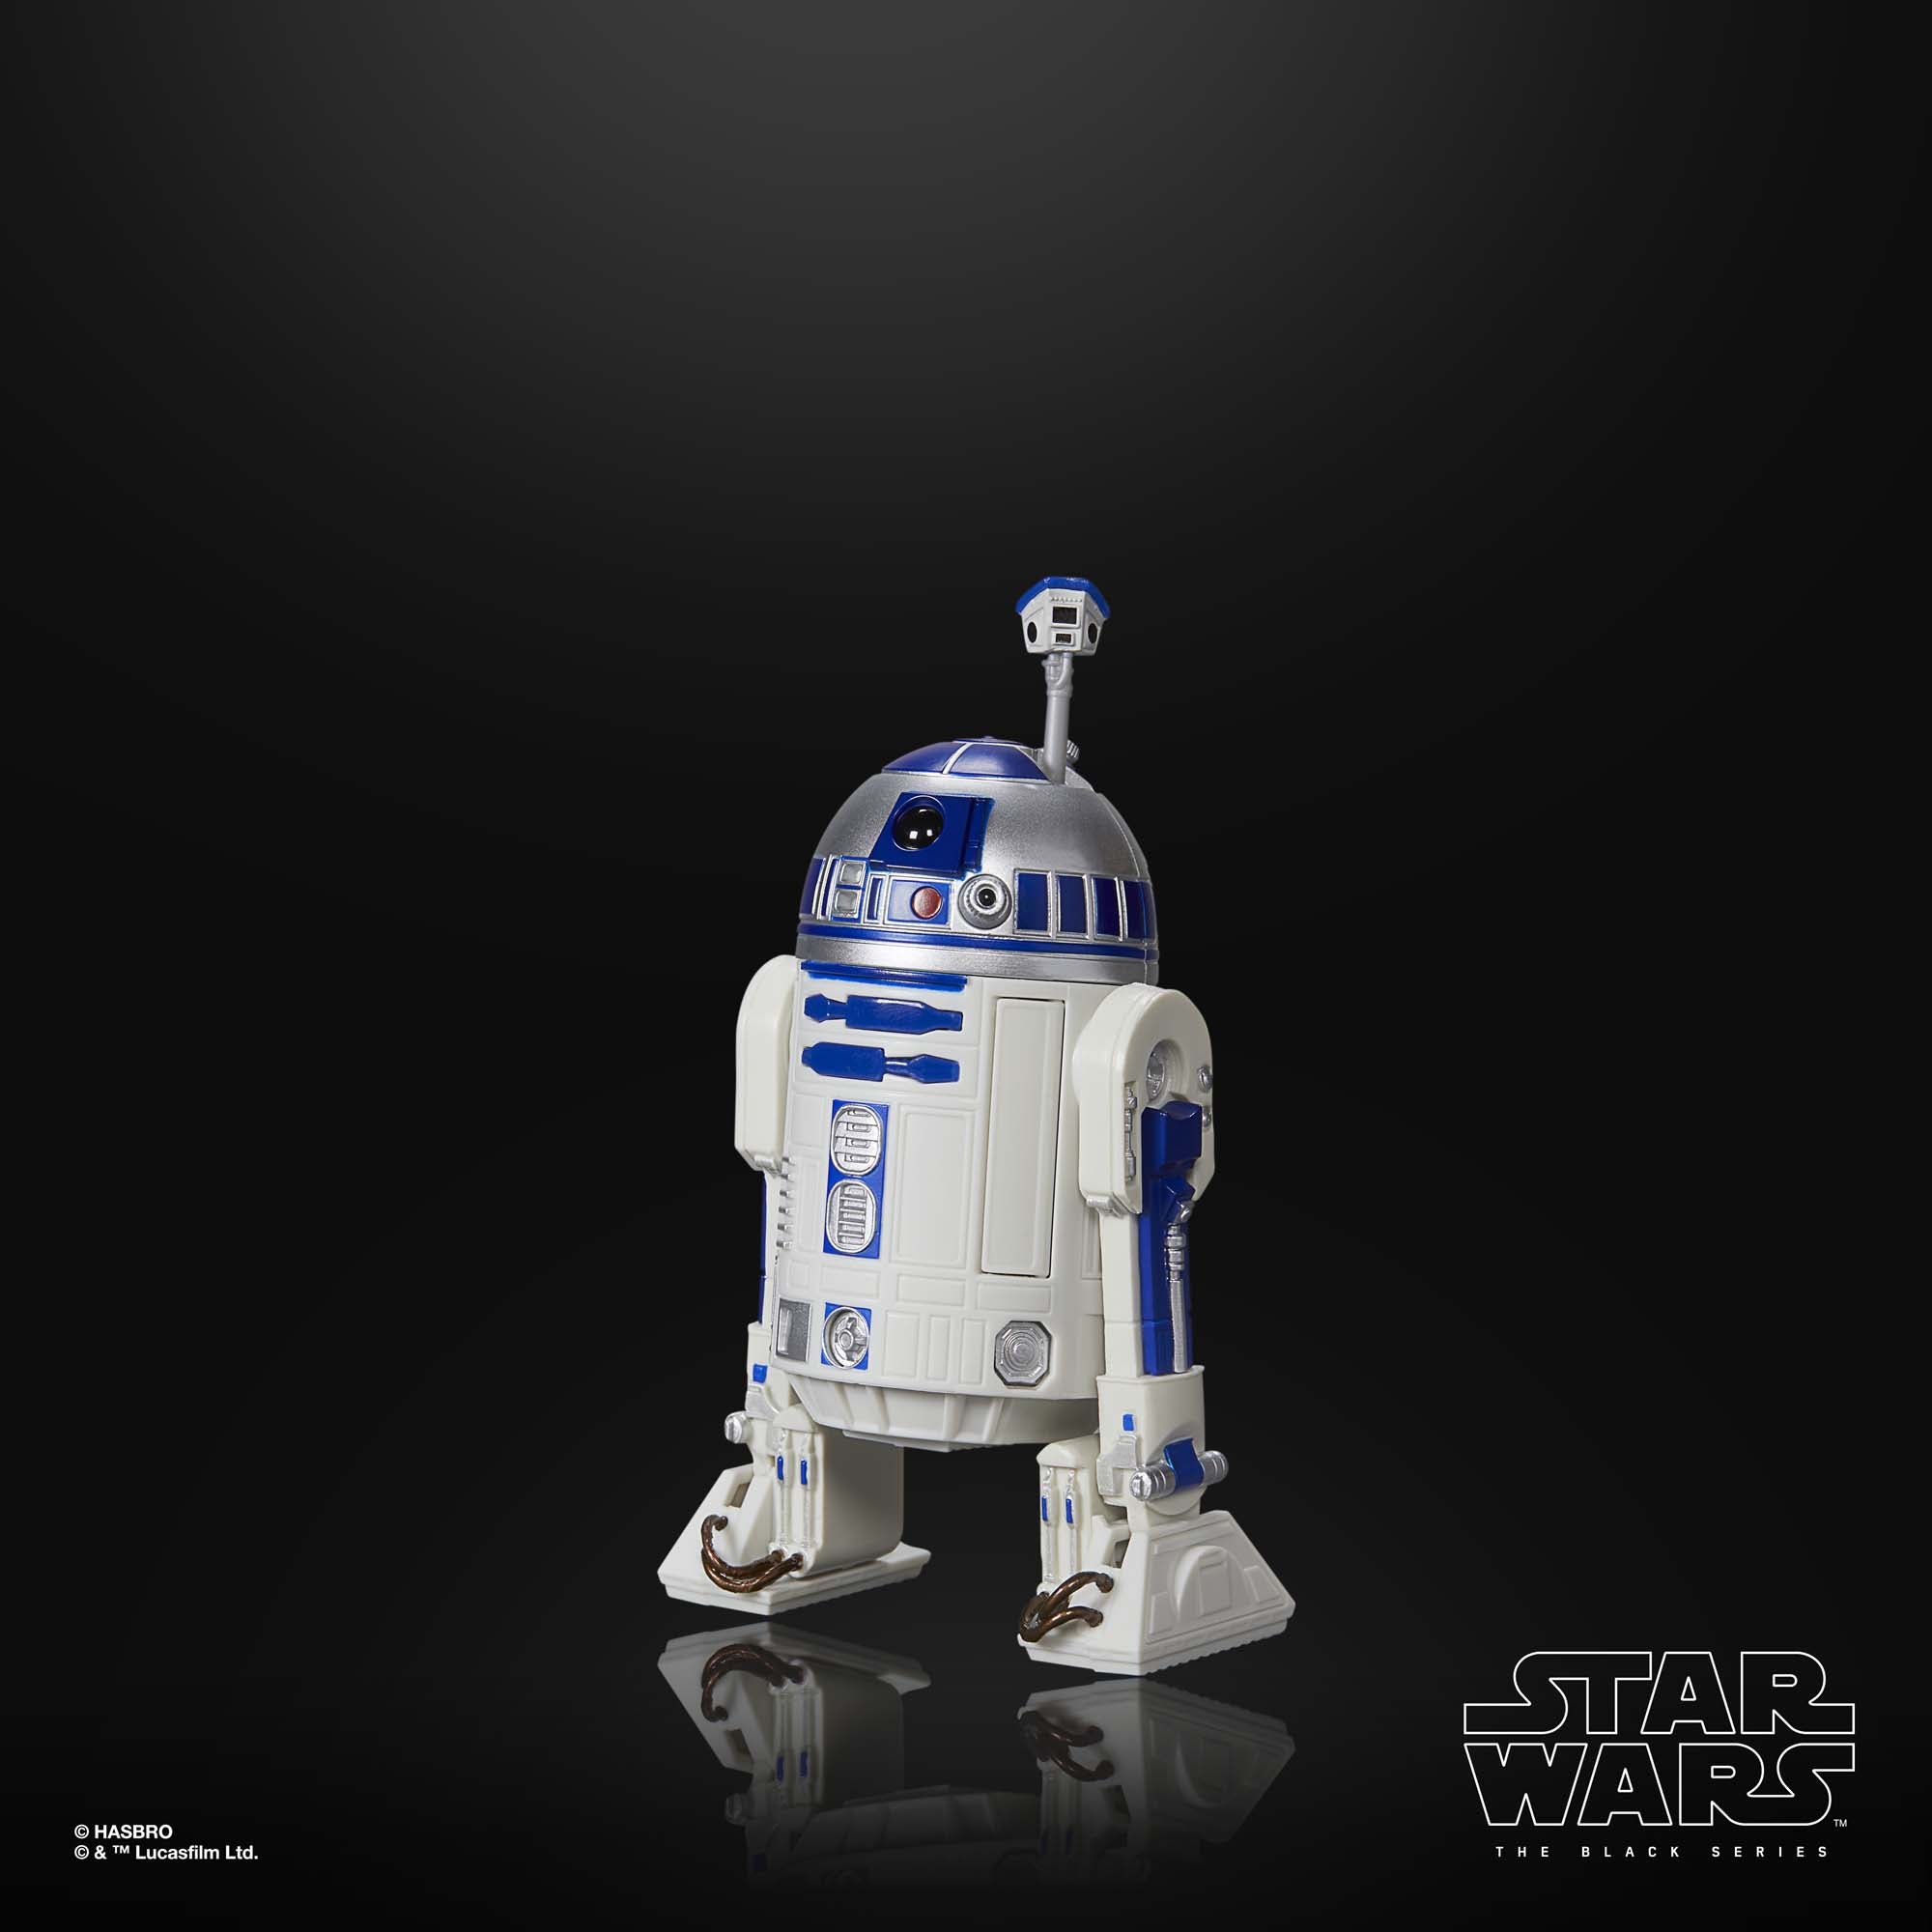 Star Wars The Vintage Collection Artoo-Detoo (R2-D2) Action Figure, Walmart  Exclusive